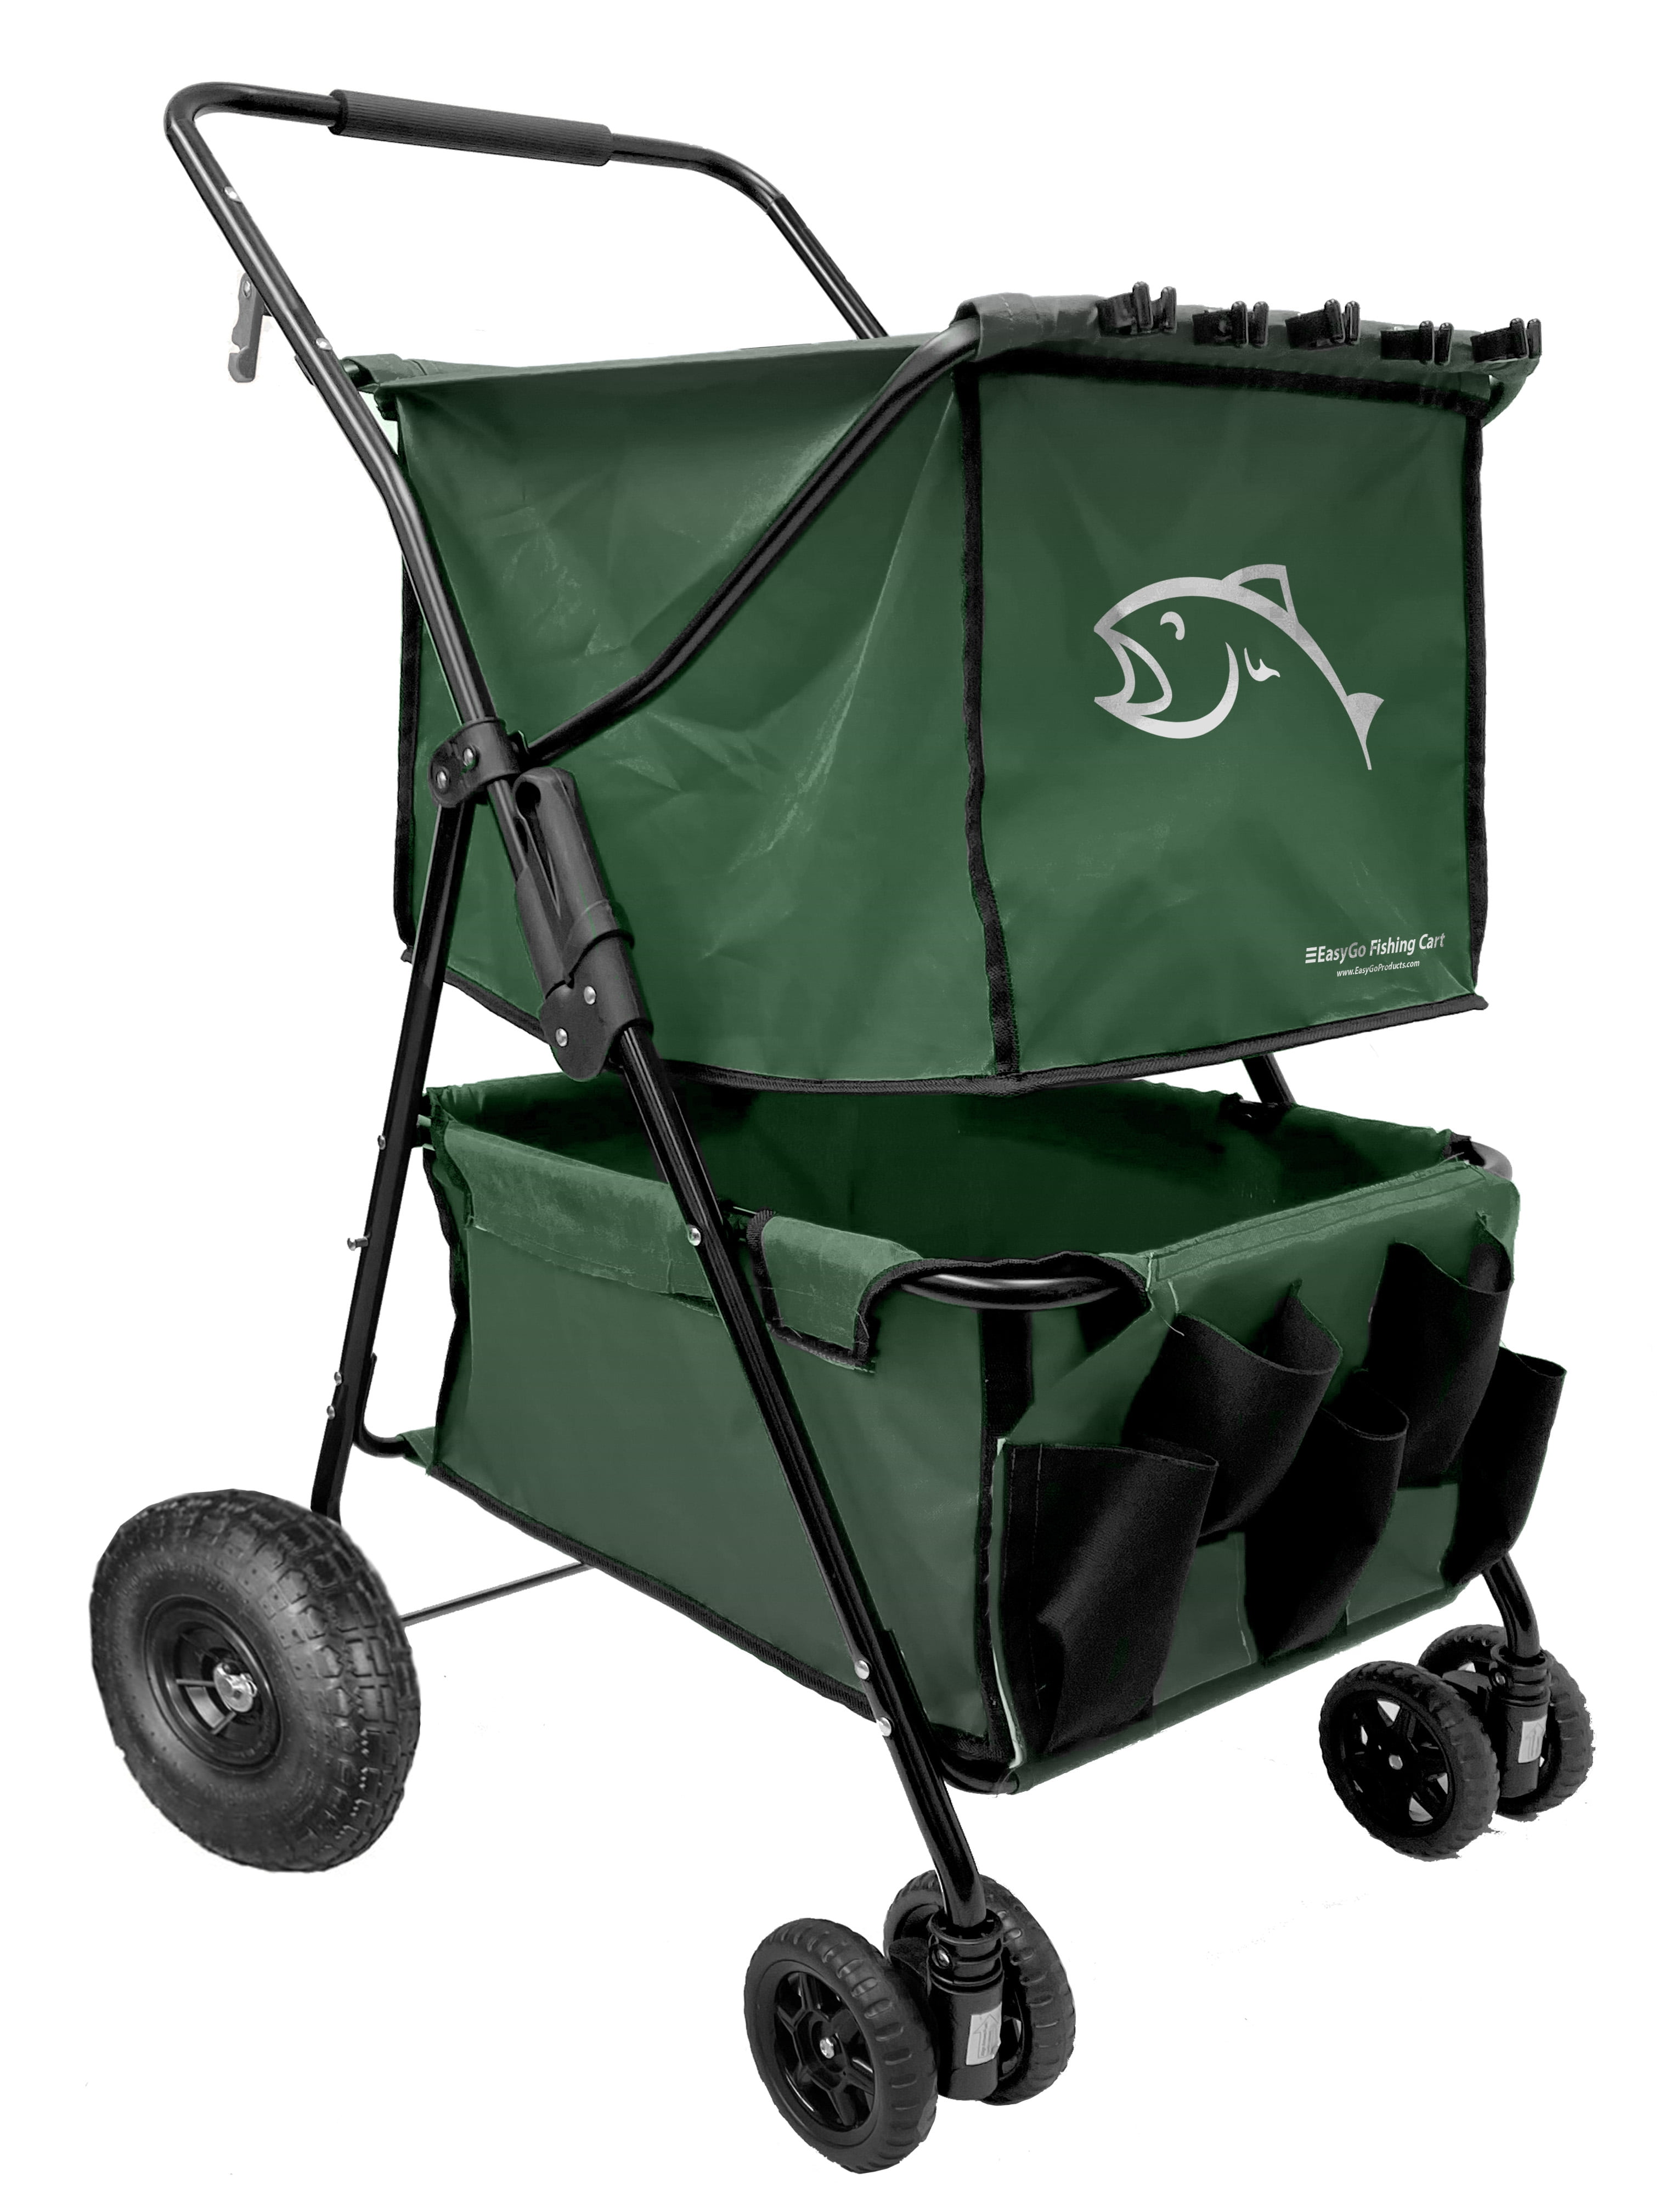 Fishing Cart Wagon - Holds 5 Fishing Poles – LARGE Air Wheels